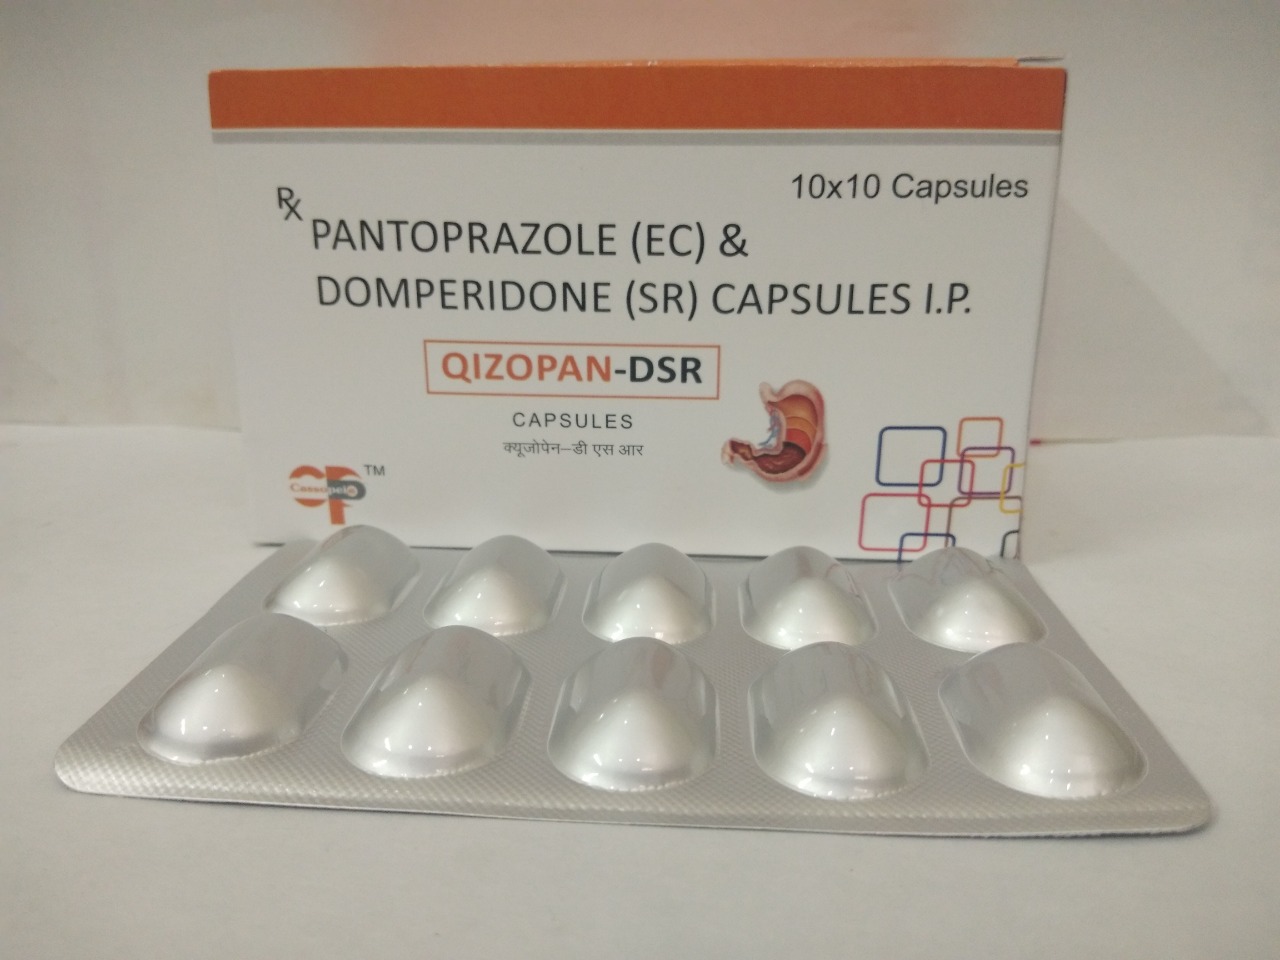 Product Name: Qizopan DSR, Compositions of Qizopan DSR are Pantoprazole (EC) & Domeperidone (SR) Capsules IP - Cassopeia Pharmaceutical Pvt Ltd